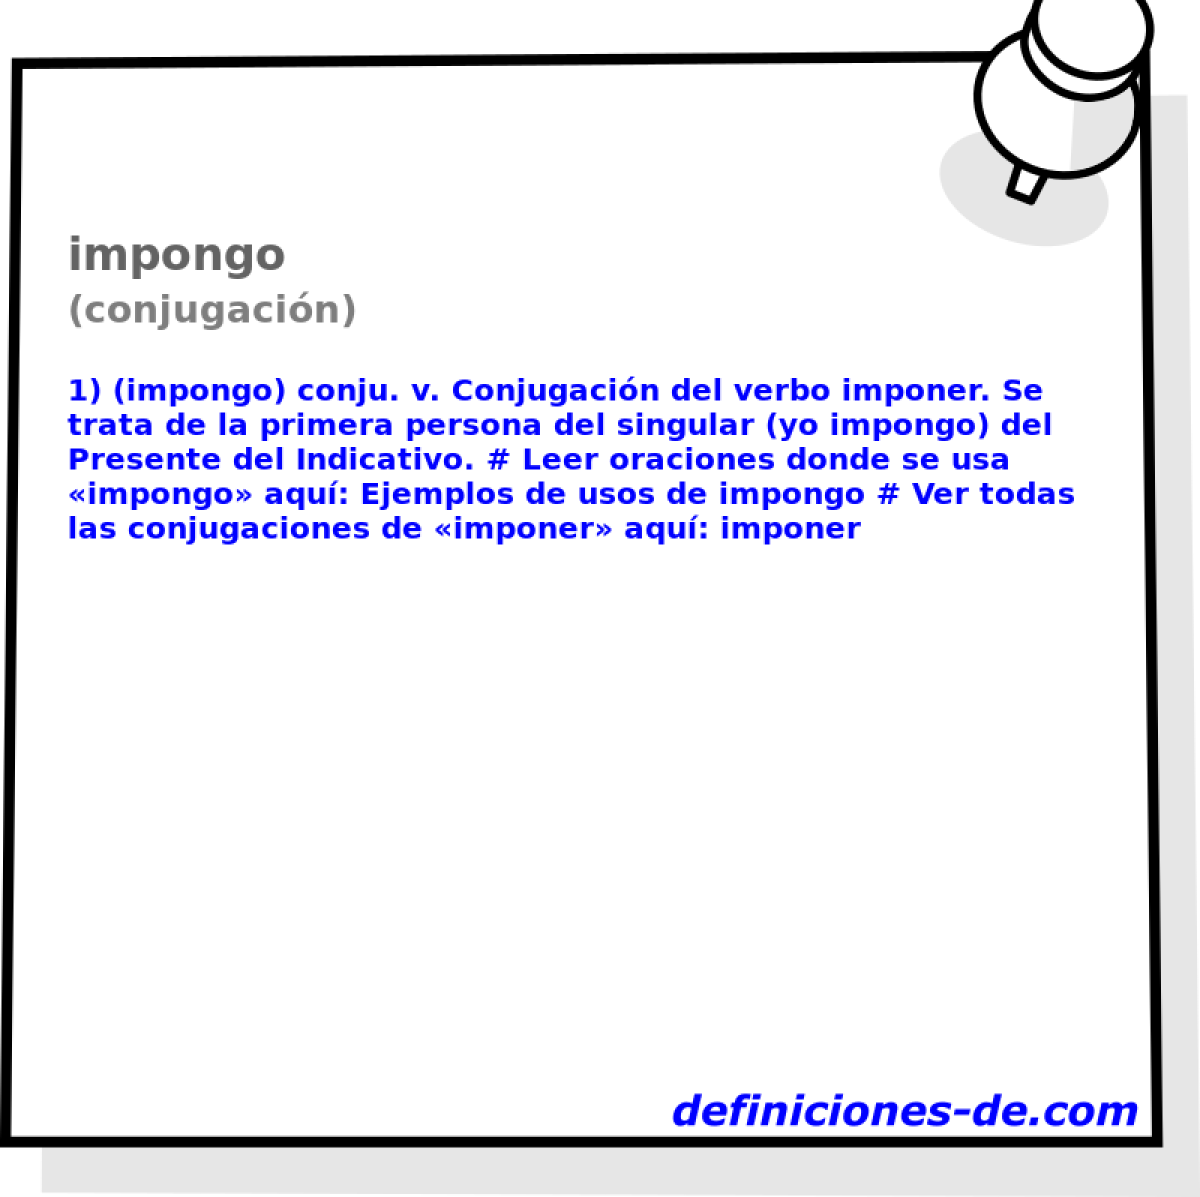 impongo (conjugacin)